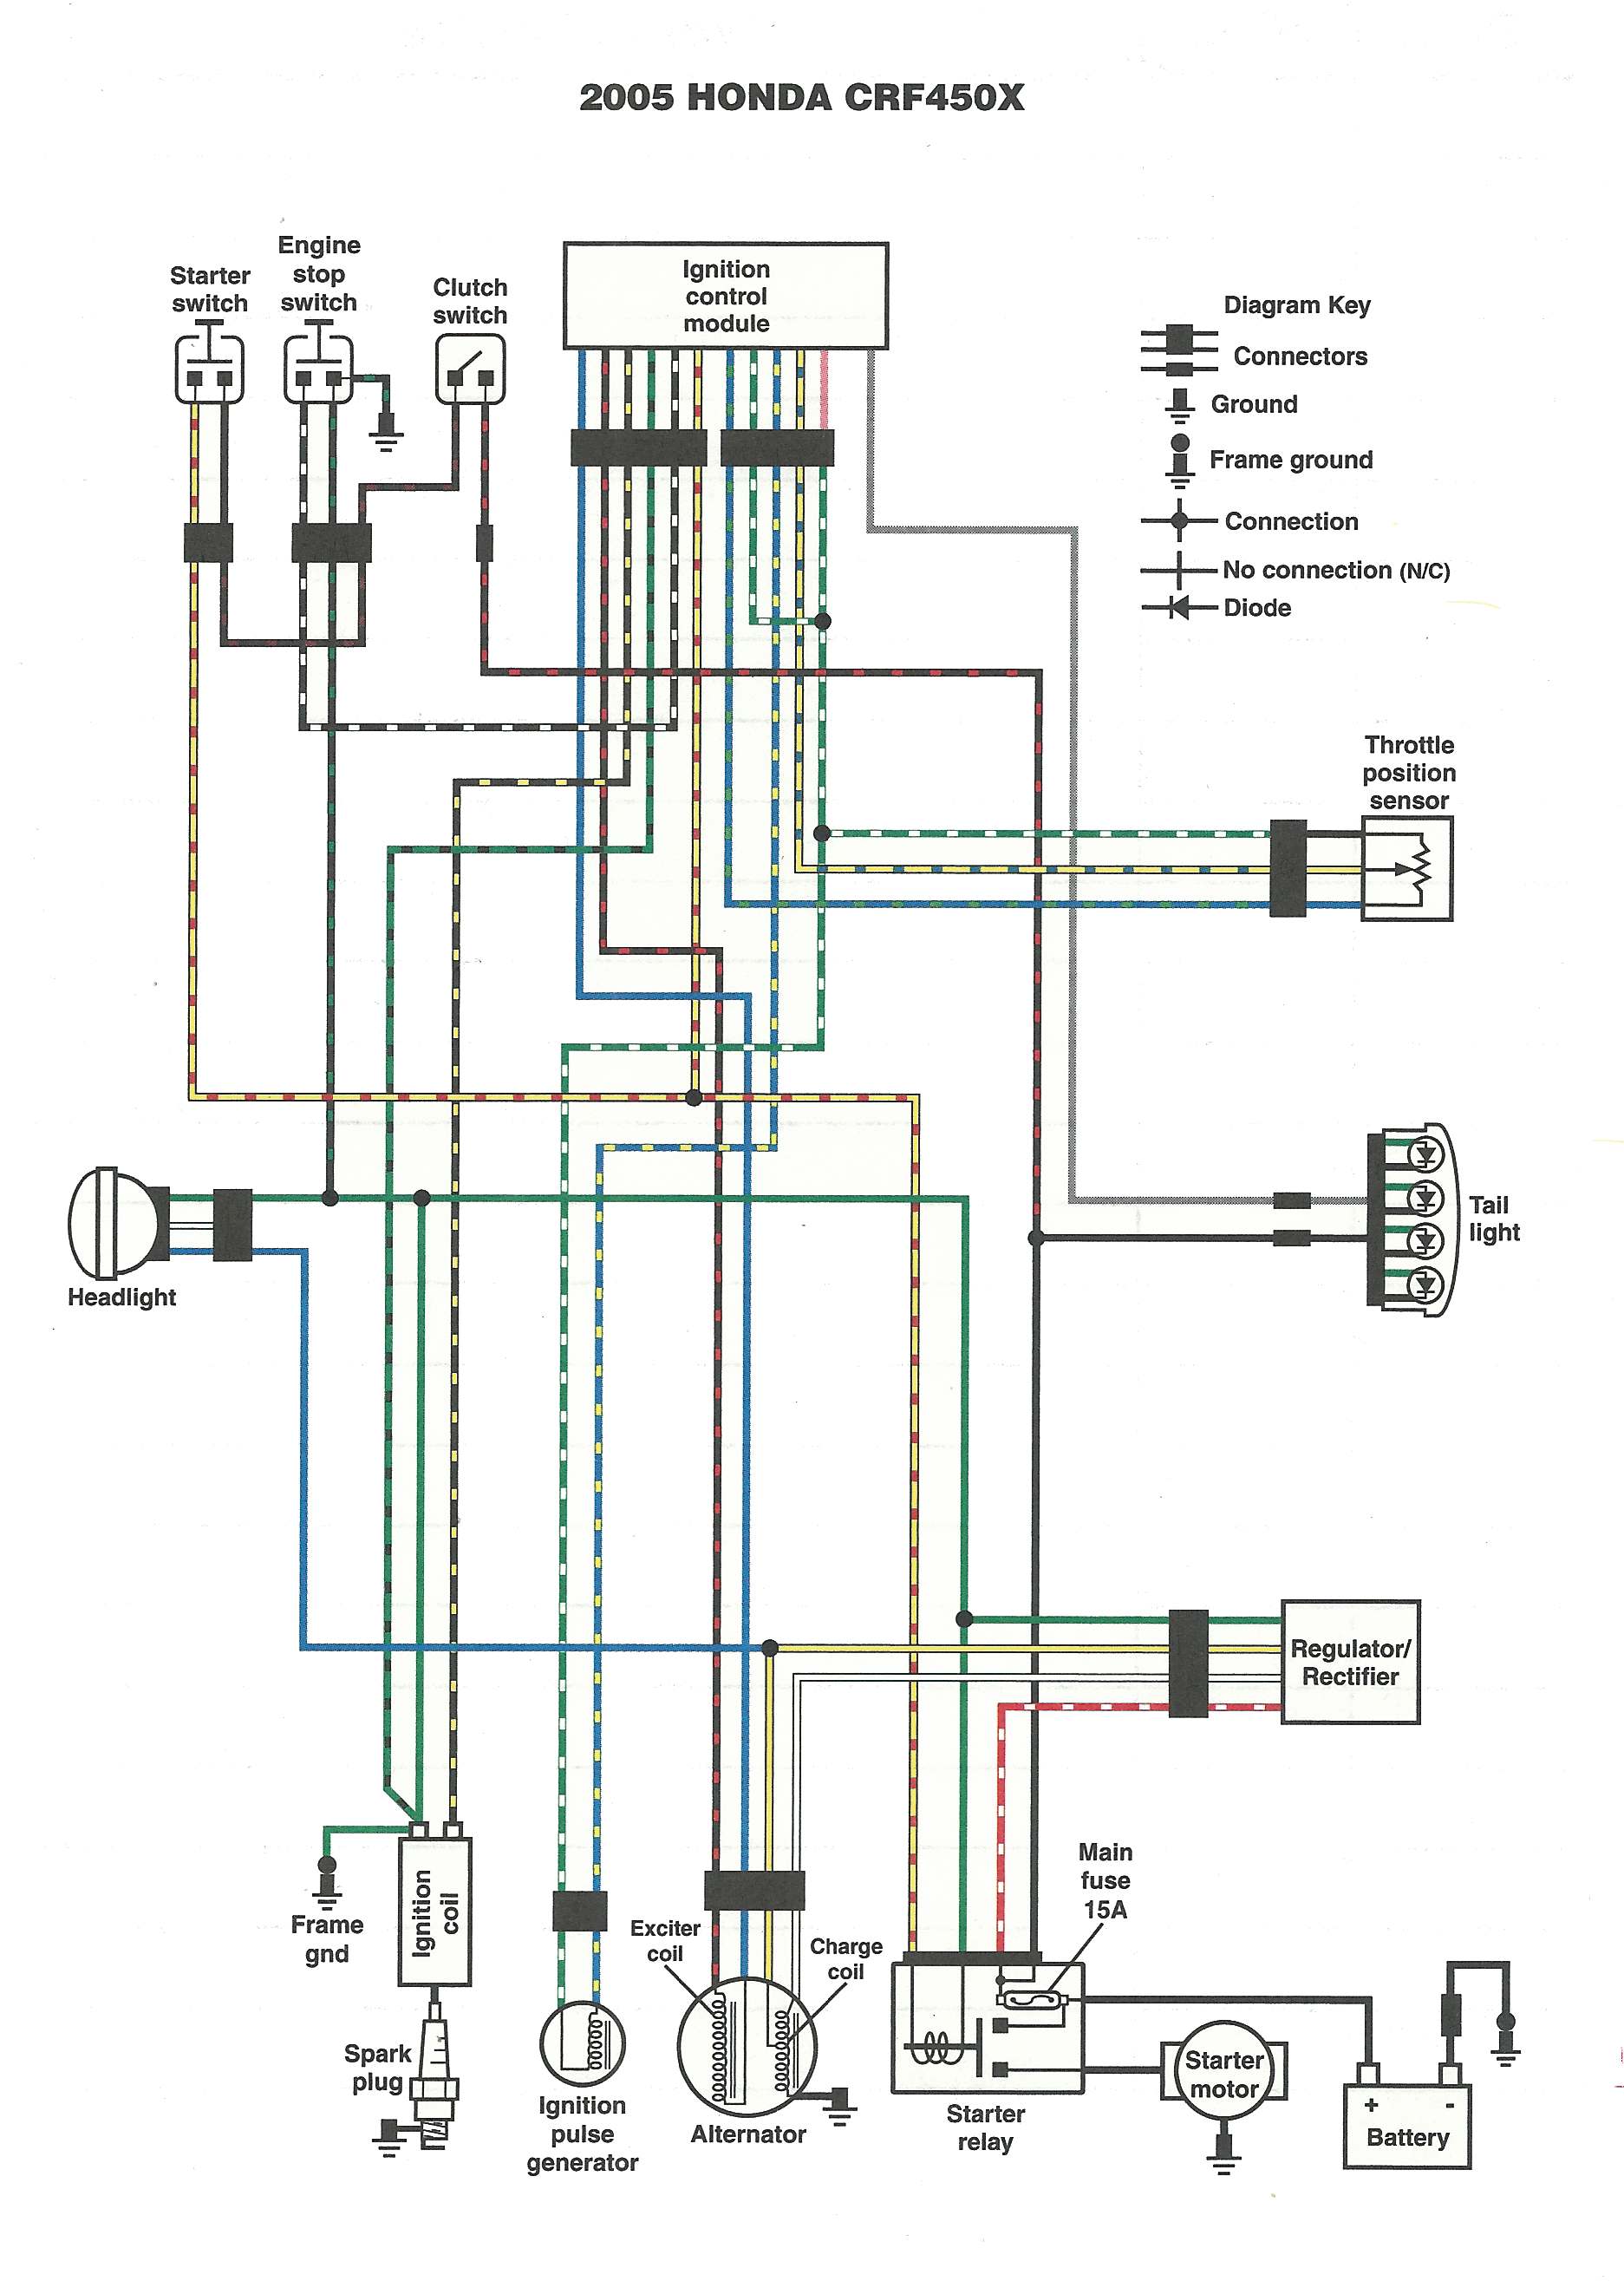 Diagram Ics Wiring Diagram Full Version Hd Quality Wiring Diagram Adiagrams Beatricemonroy It